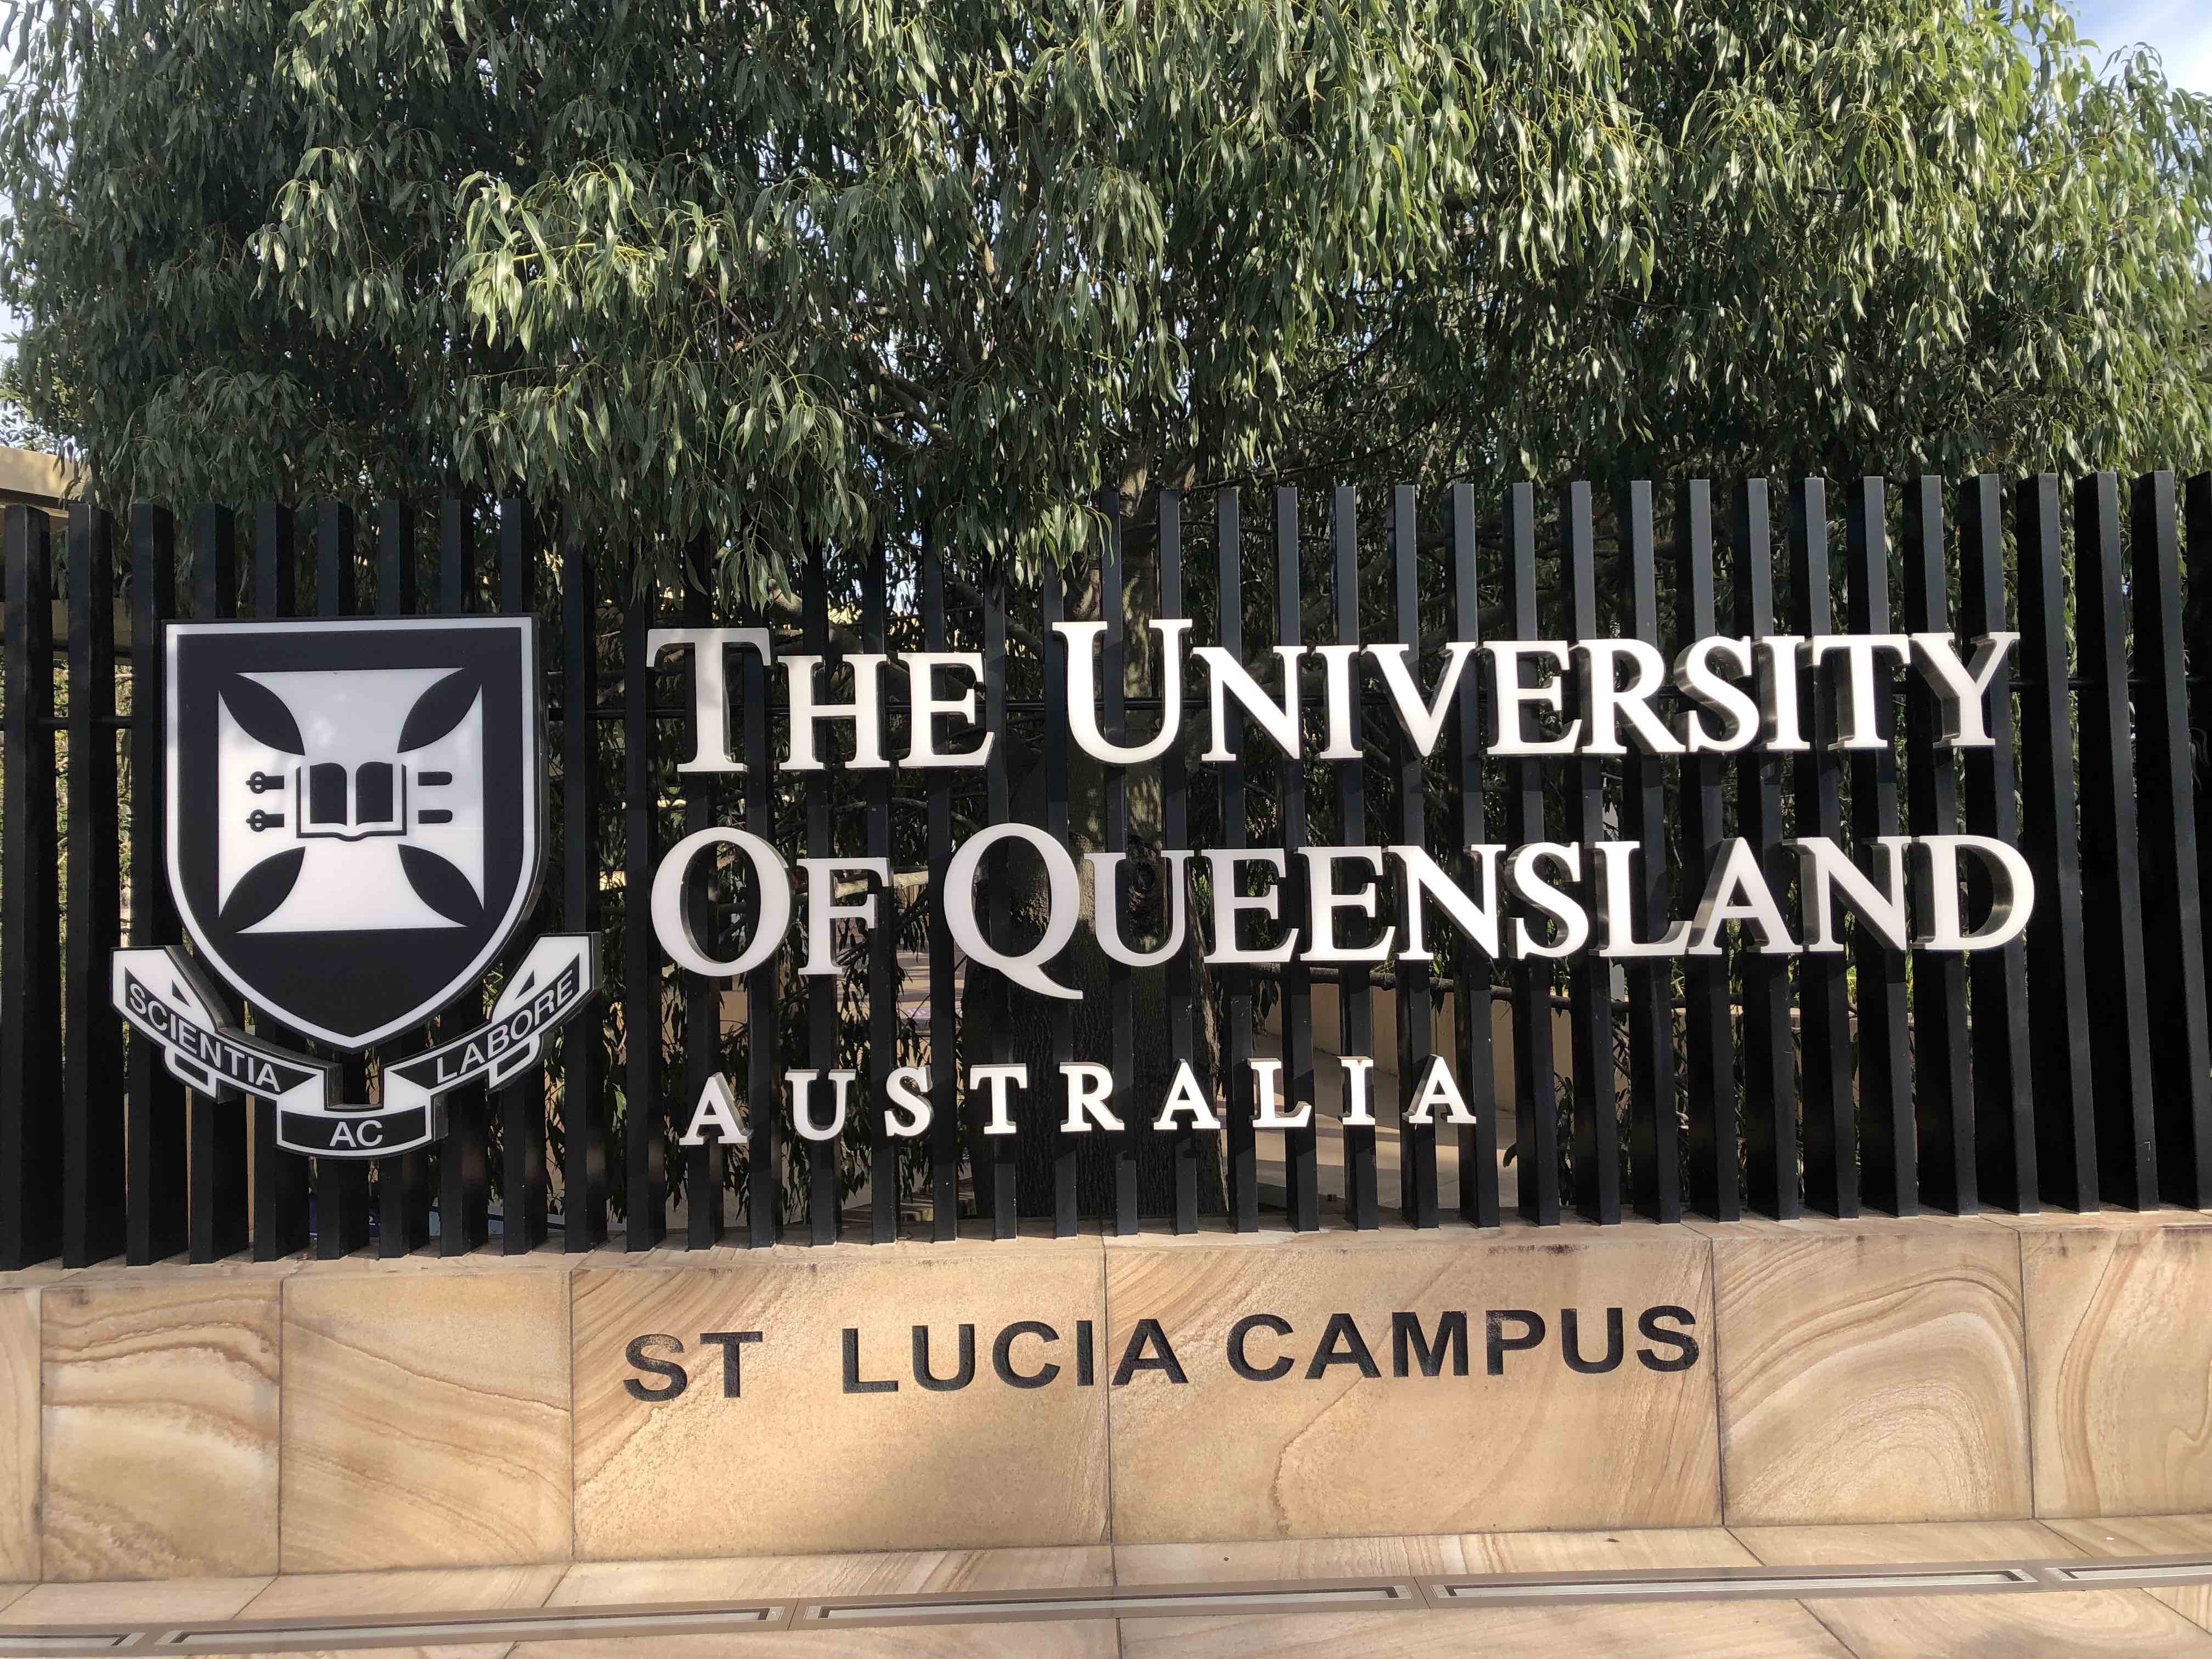 Sign saying: University of Queensland Australia, St Lucia Campus